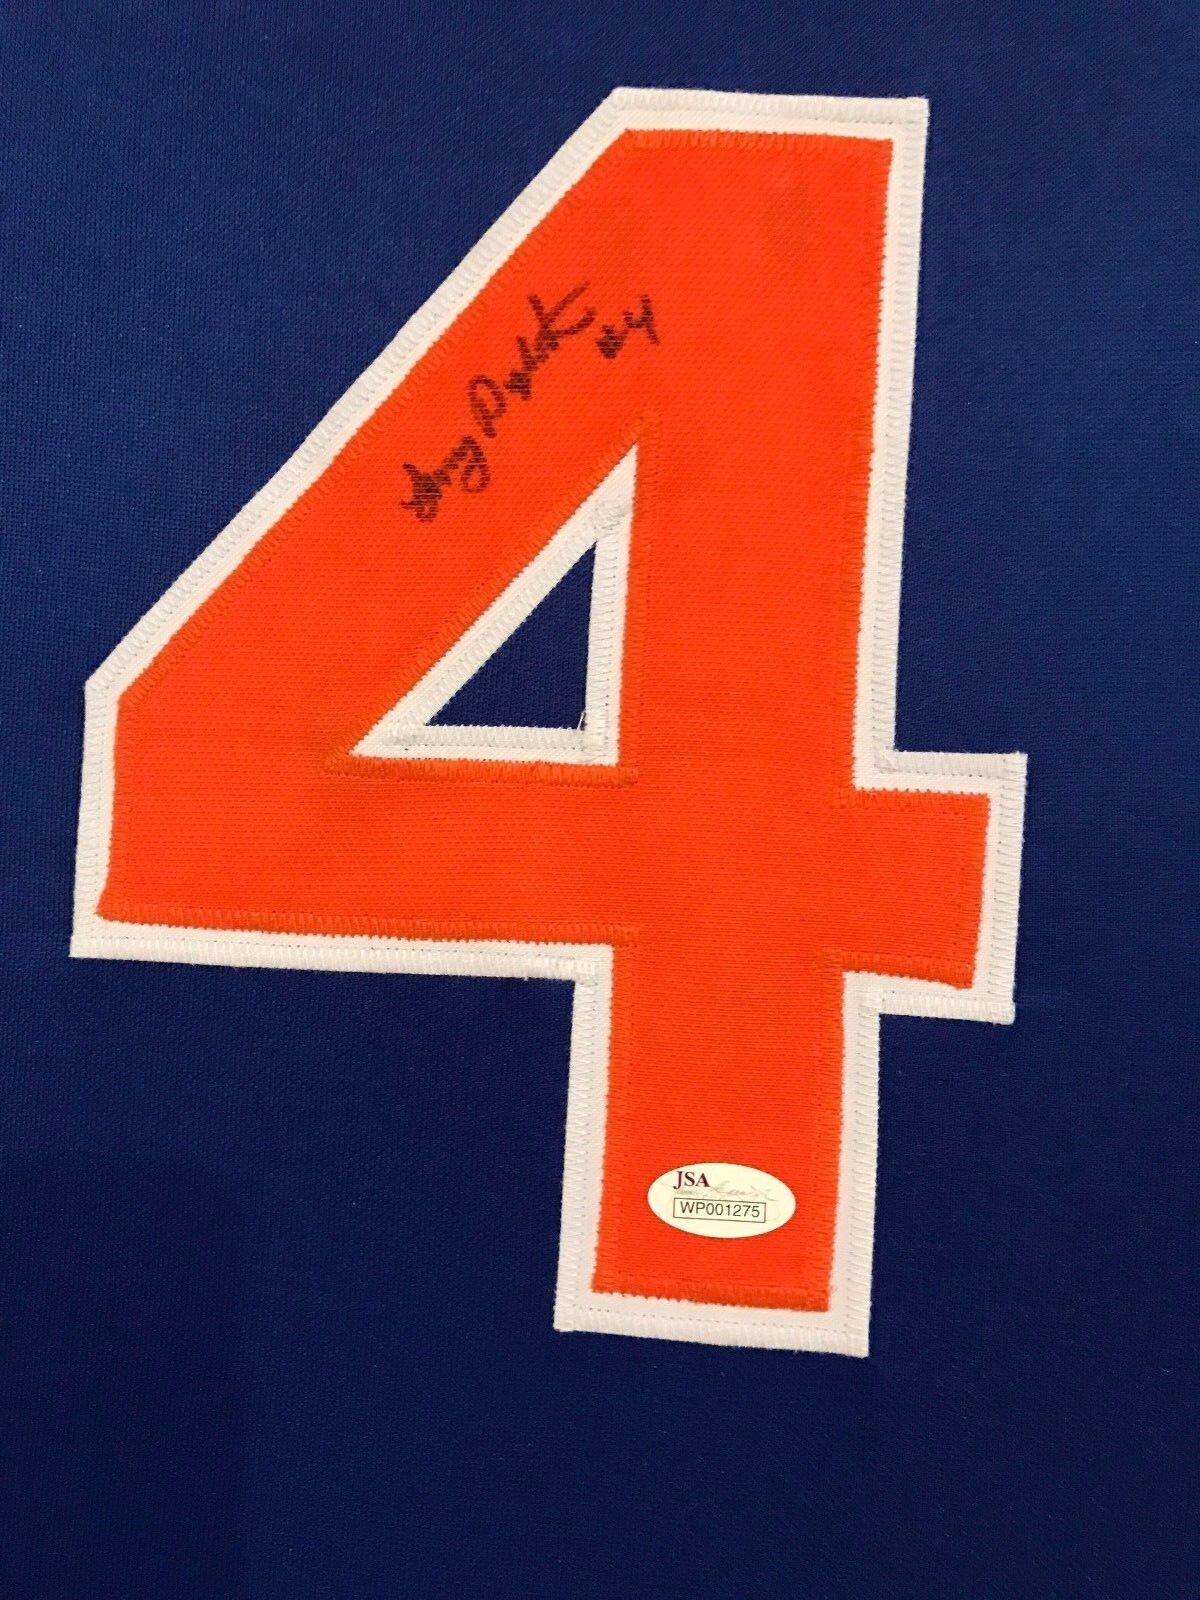 MVP Authentics Framed Lenny Dykstra Autographed Signed N.Y. Mets Jersey Jsa Coa 360 sports jersey framing , jersey framing